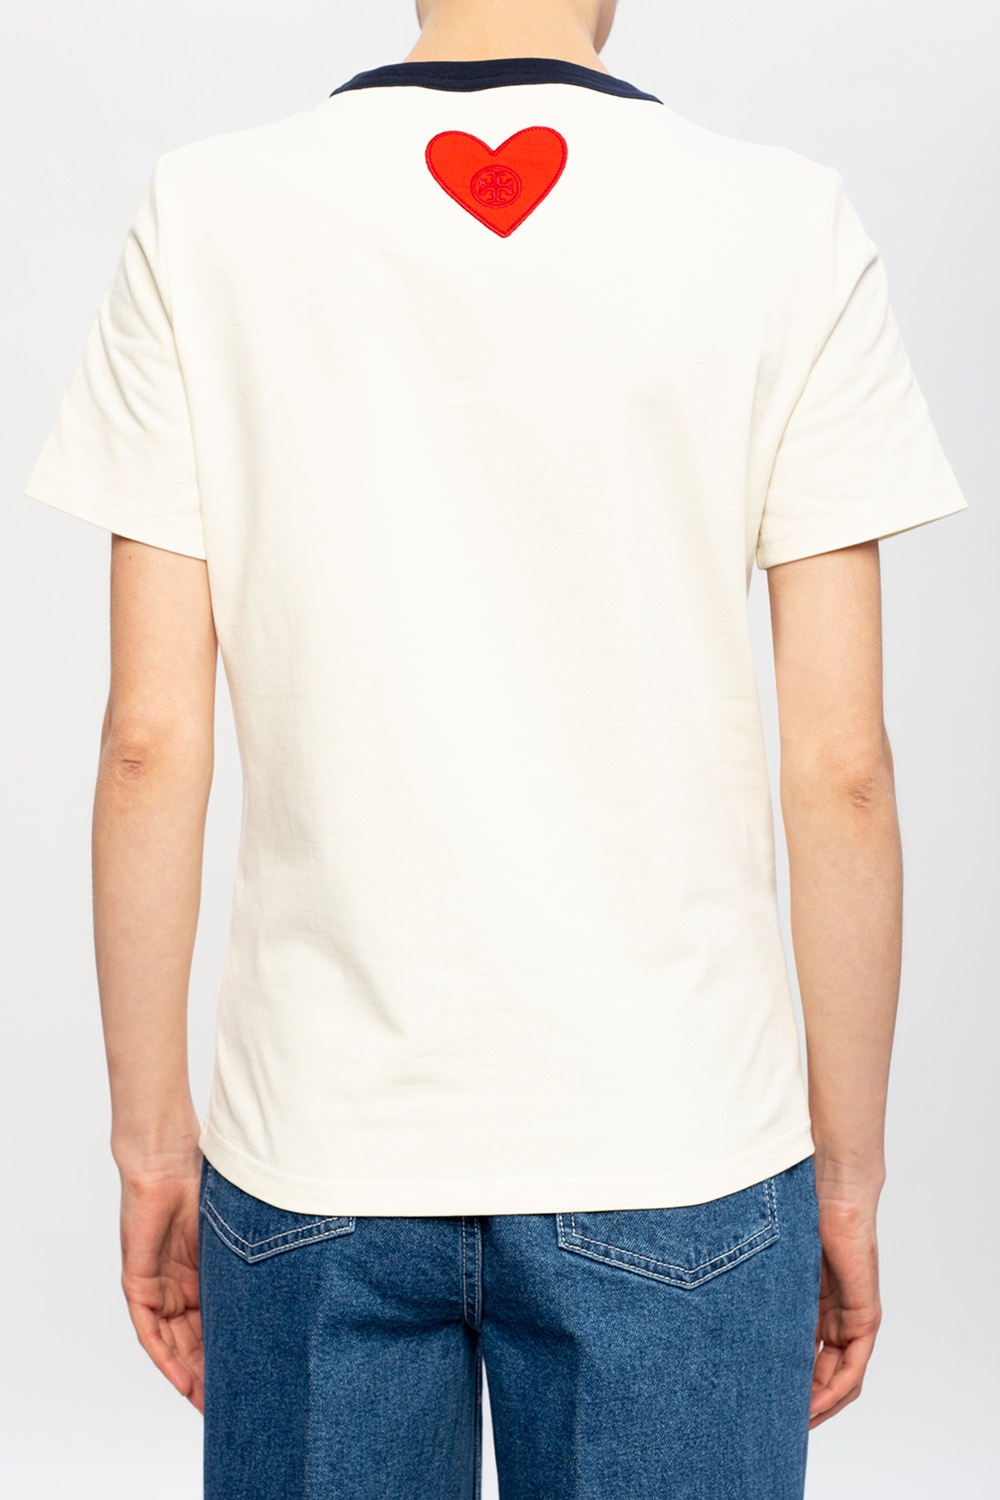 Cream T-shirt with logo Tory Burch - Vitkac France